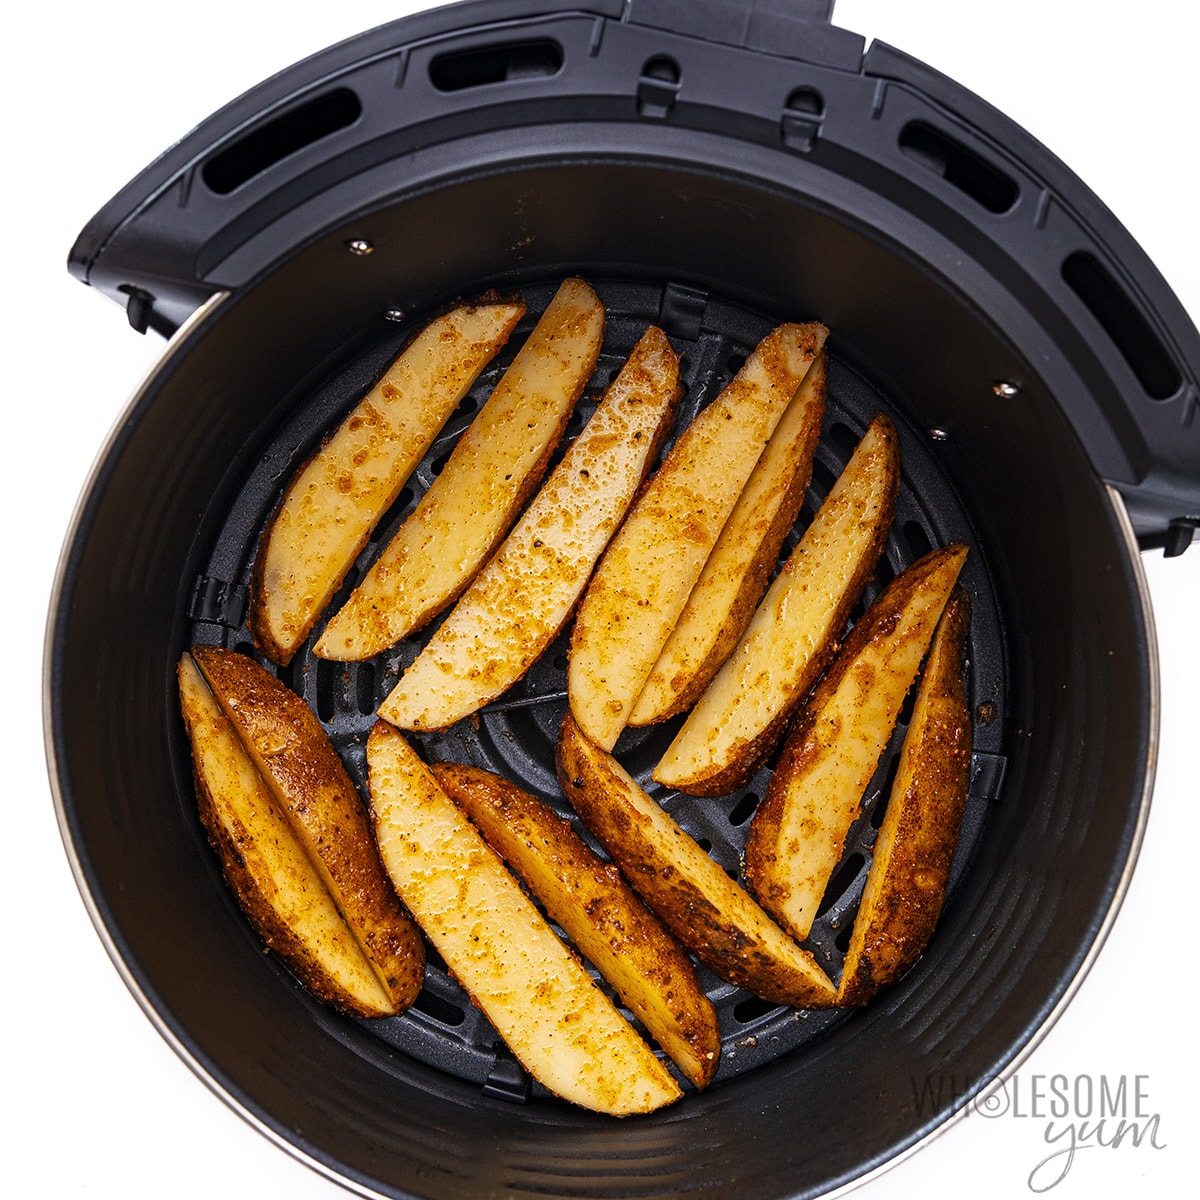 Seasoned potato wedges in an air fryer basket.